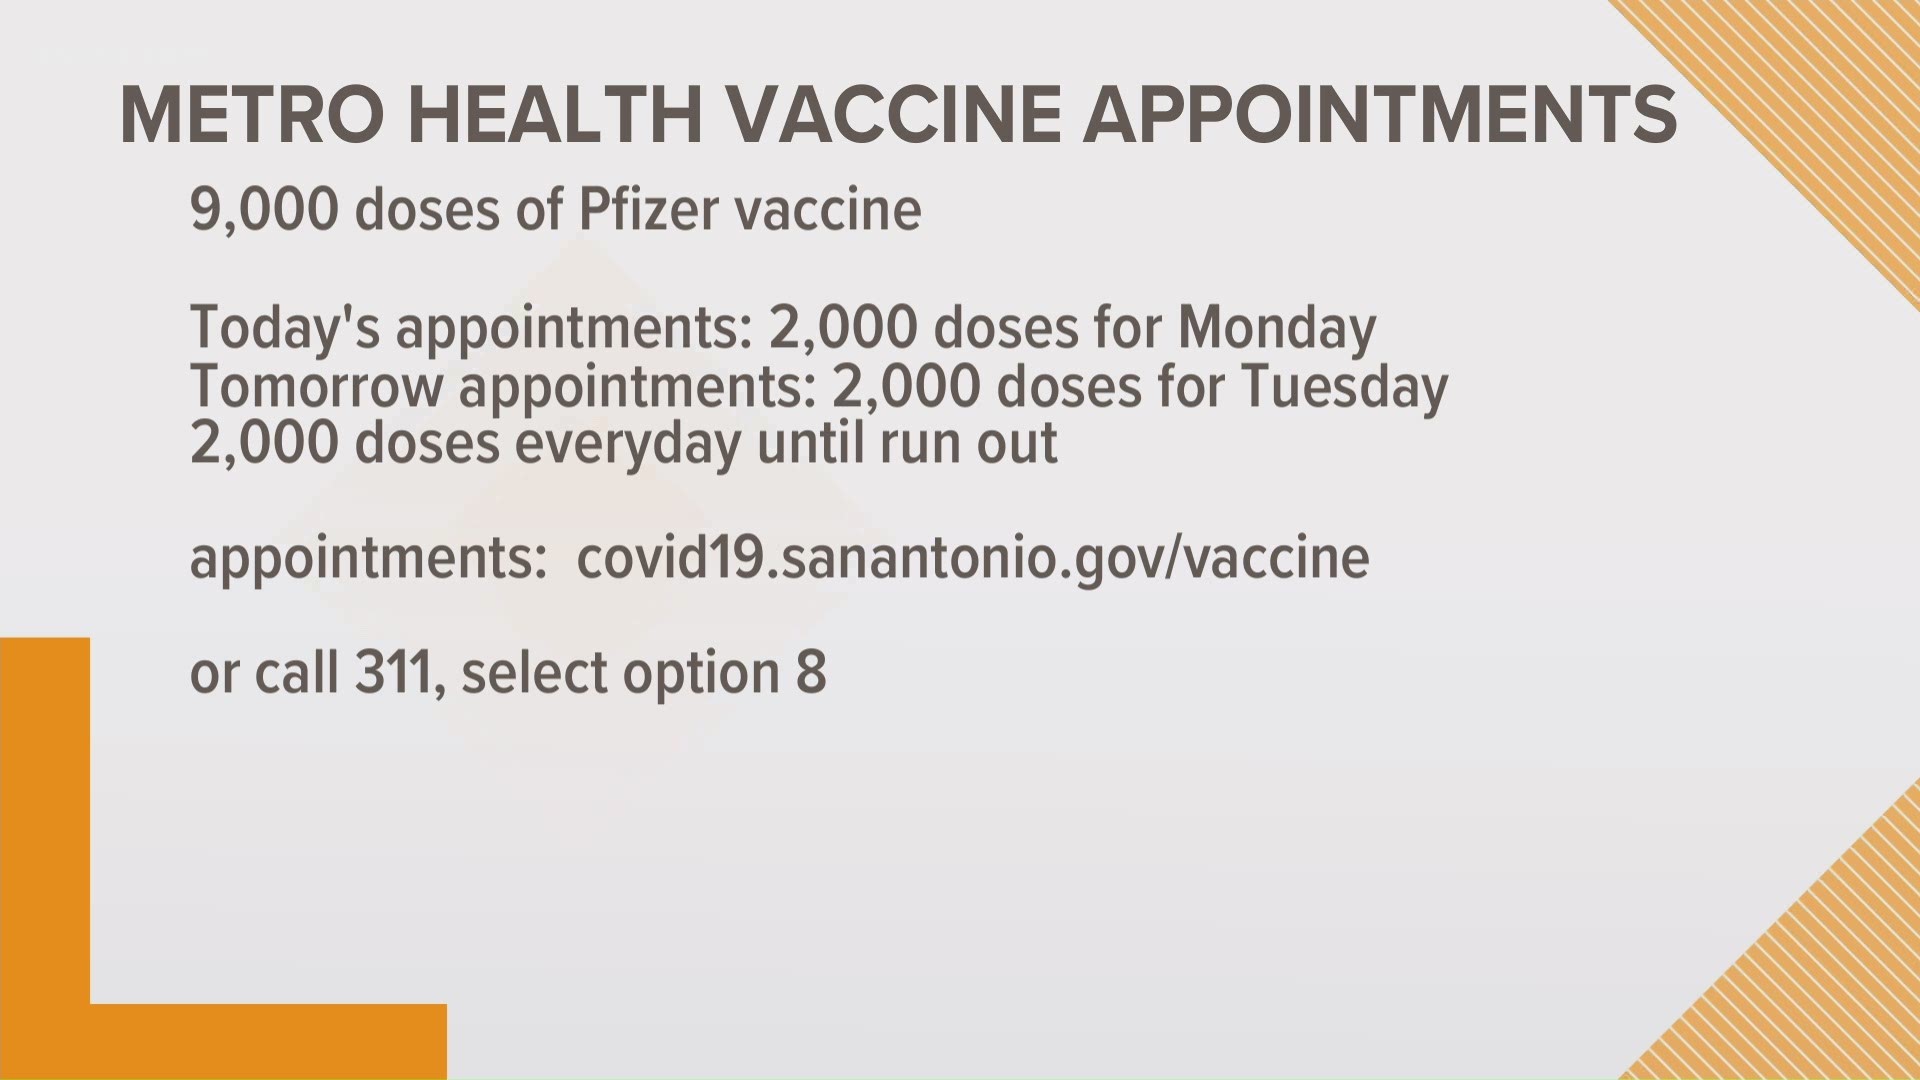 The San Antonio Metro Health District received 9,000 doses of Pfizer vaccines.